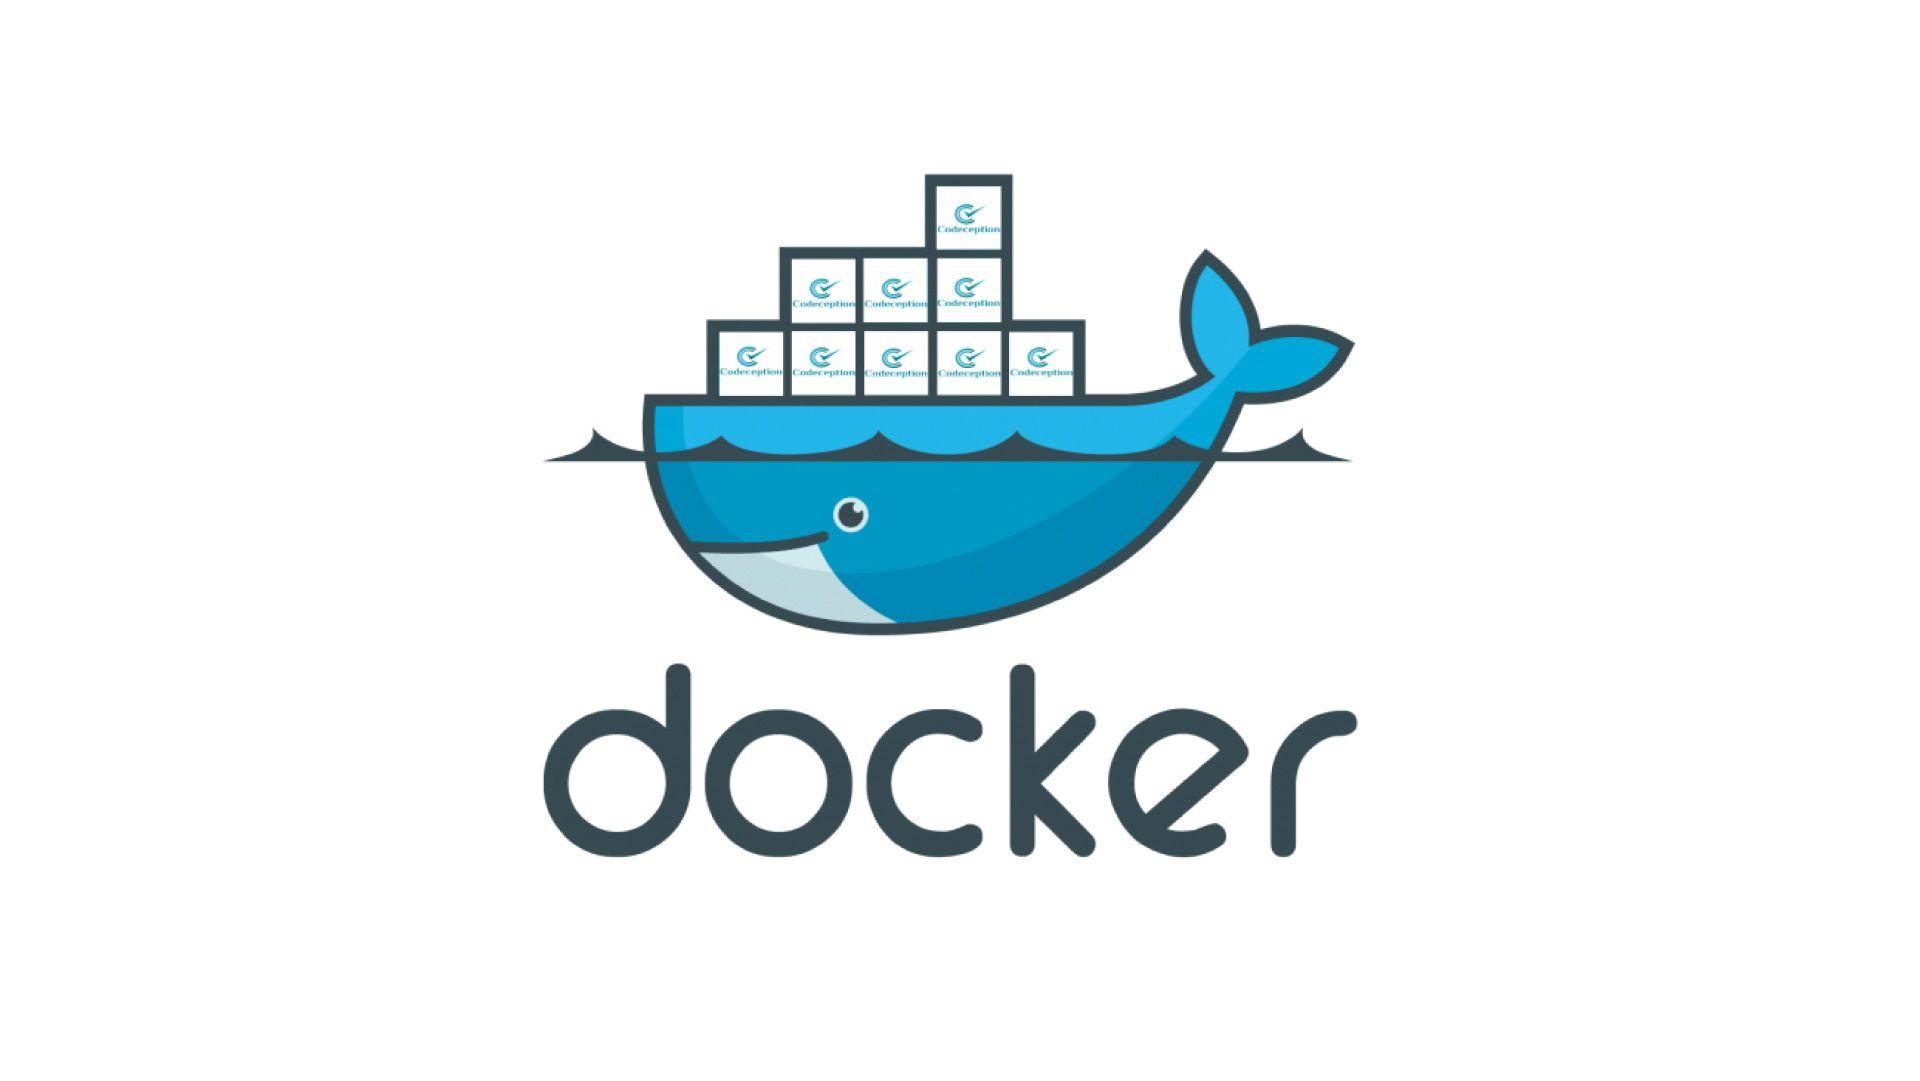 Docker Logo - Codeception To Start Automatic Tests Using Docker Console